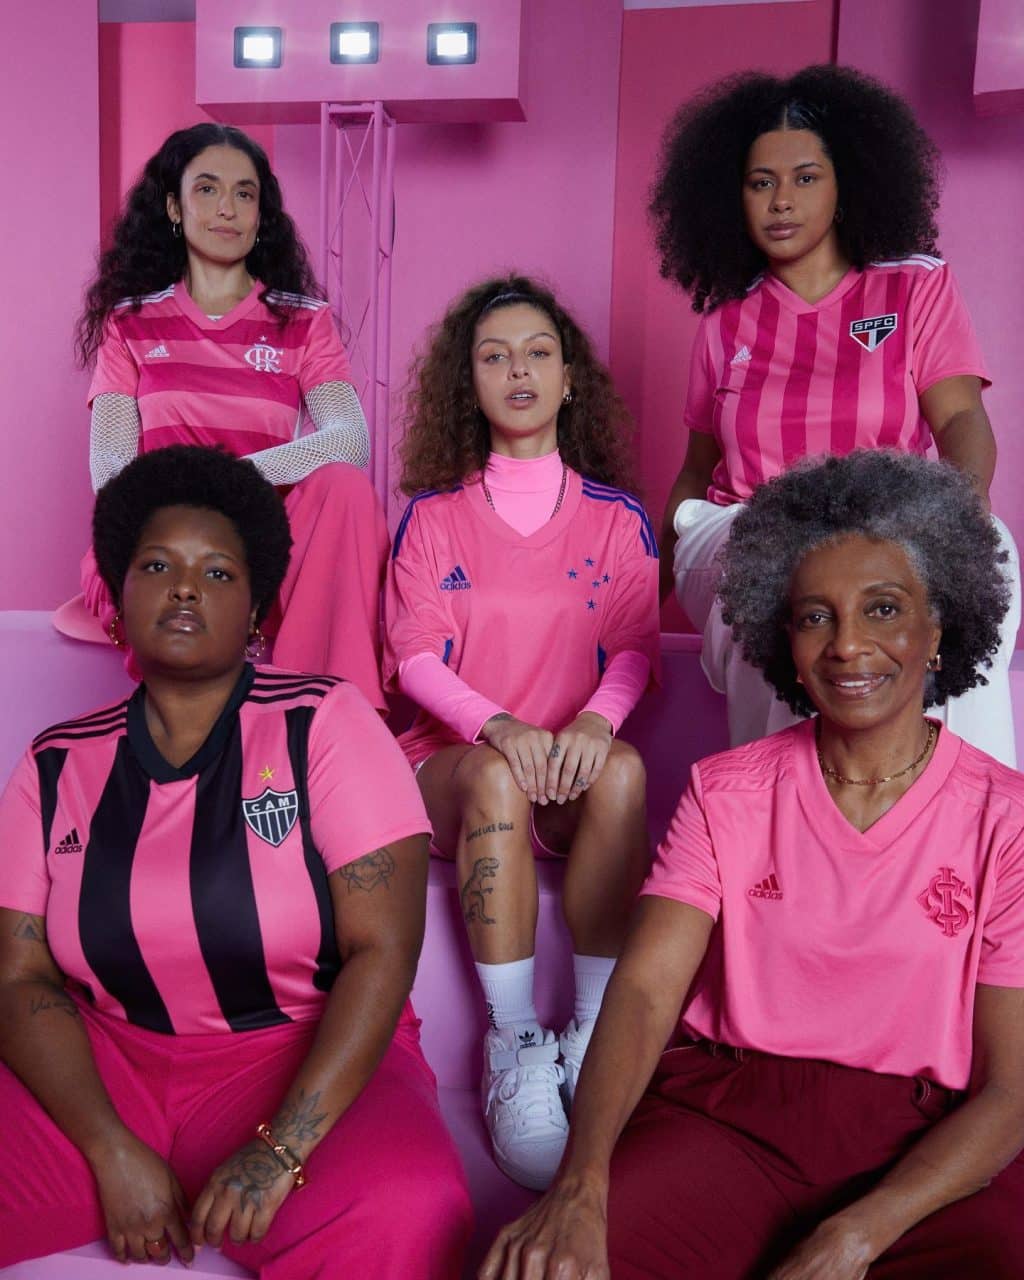 adidas presenta camisetas rosa para sus equipos brasileños